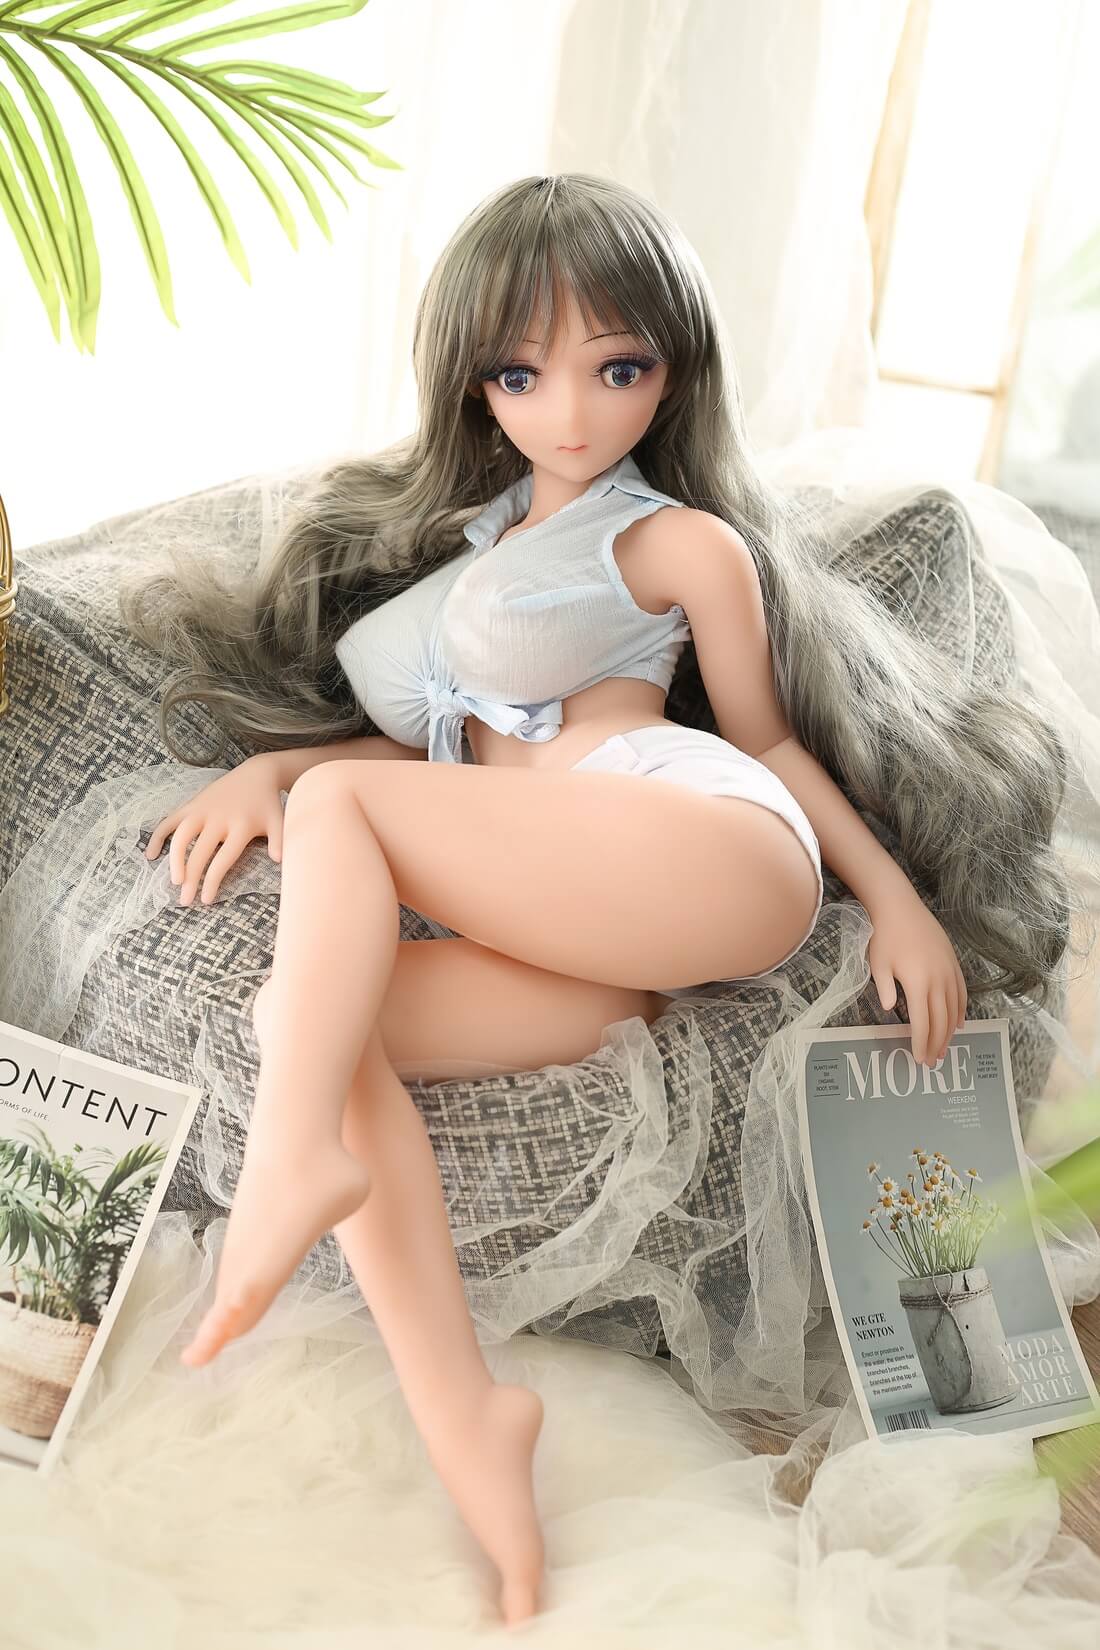 Miniaturowa lalka seksu z anime